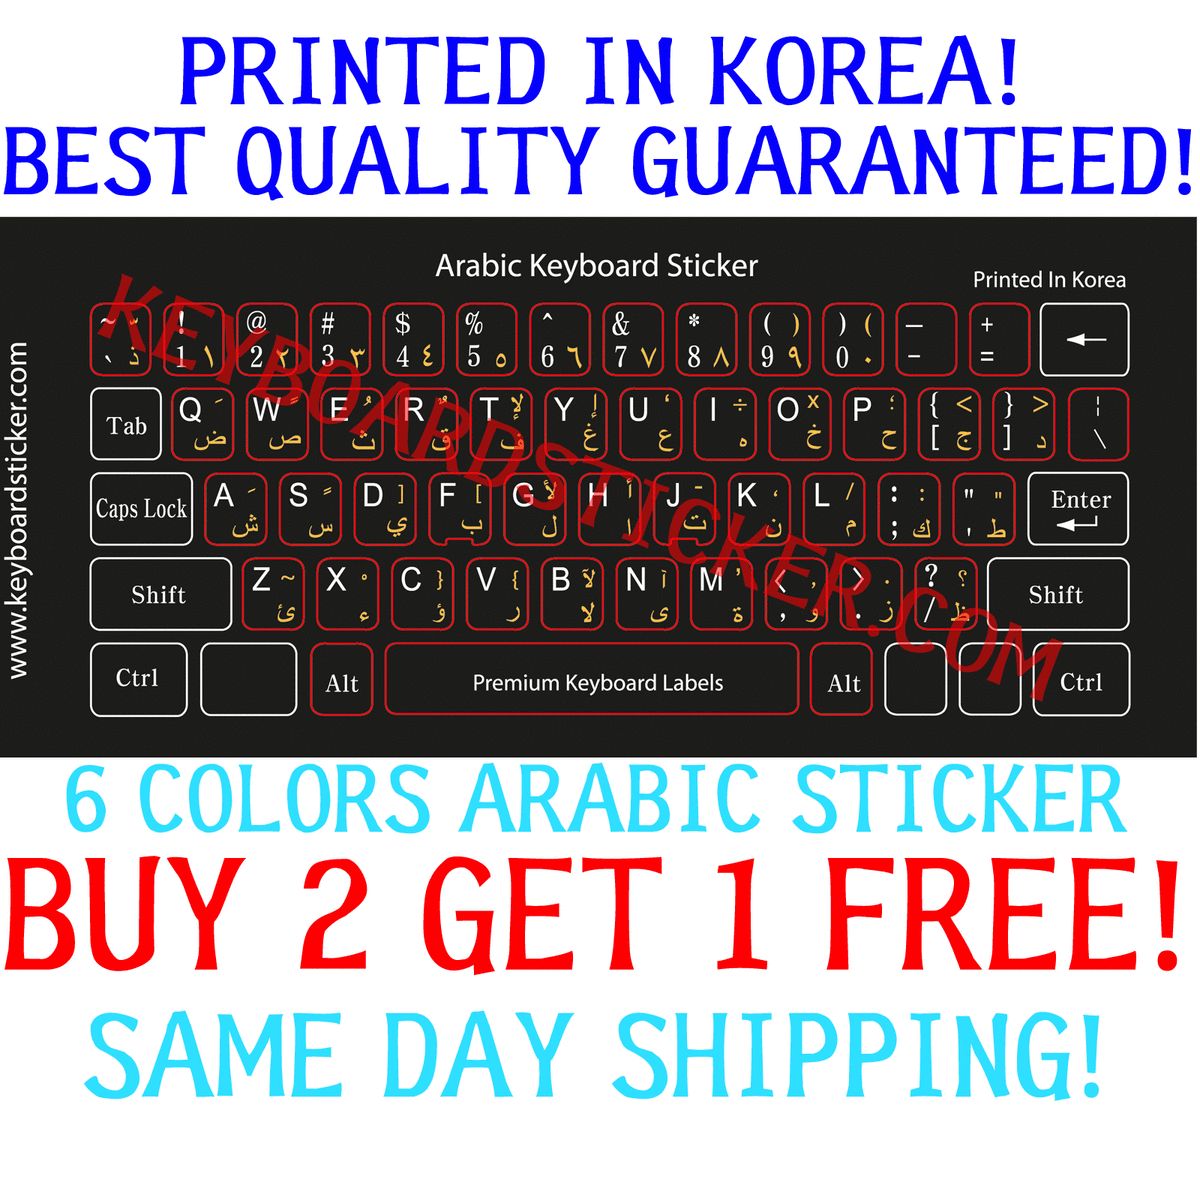 Best Quality Arabic Keyboard Stickers